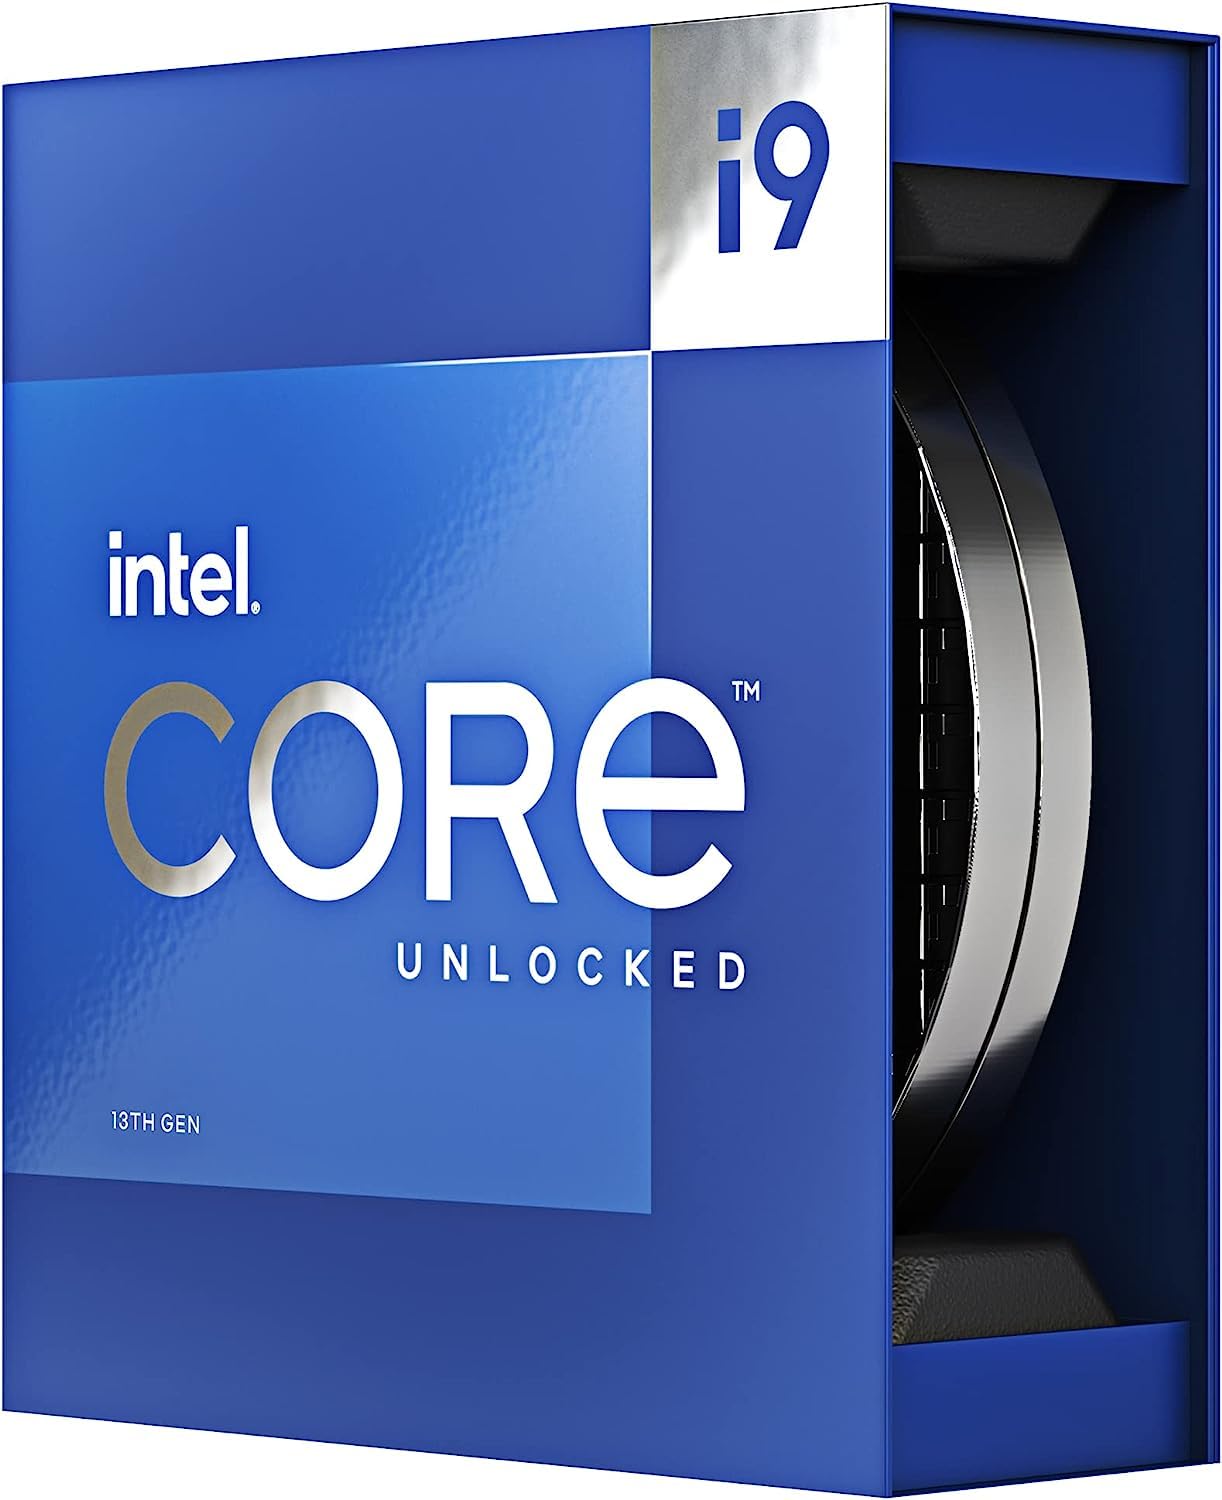 Intel 13th Gen Combo - Intel® Core™ i9-13900K Processor/Asus Prime Z790-P WiFi Motherboard/Gskill Trident Z5 64 GB RAM / Corsair Icue H150i Elite CAPELLIX XT Liquid Cooler